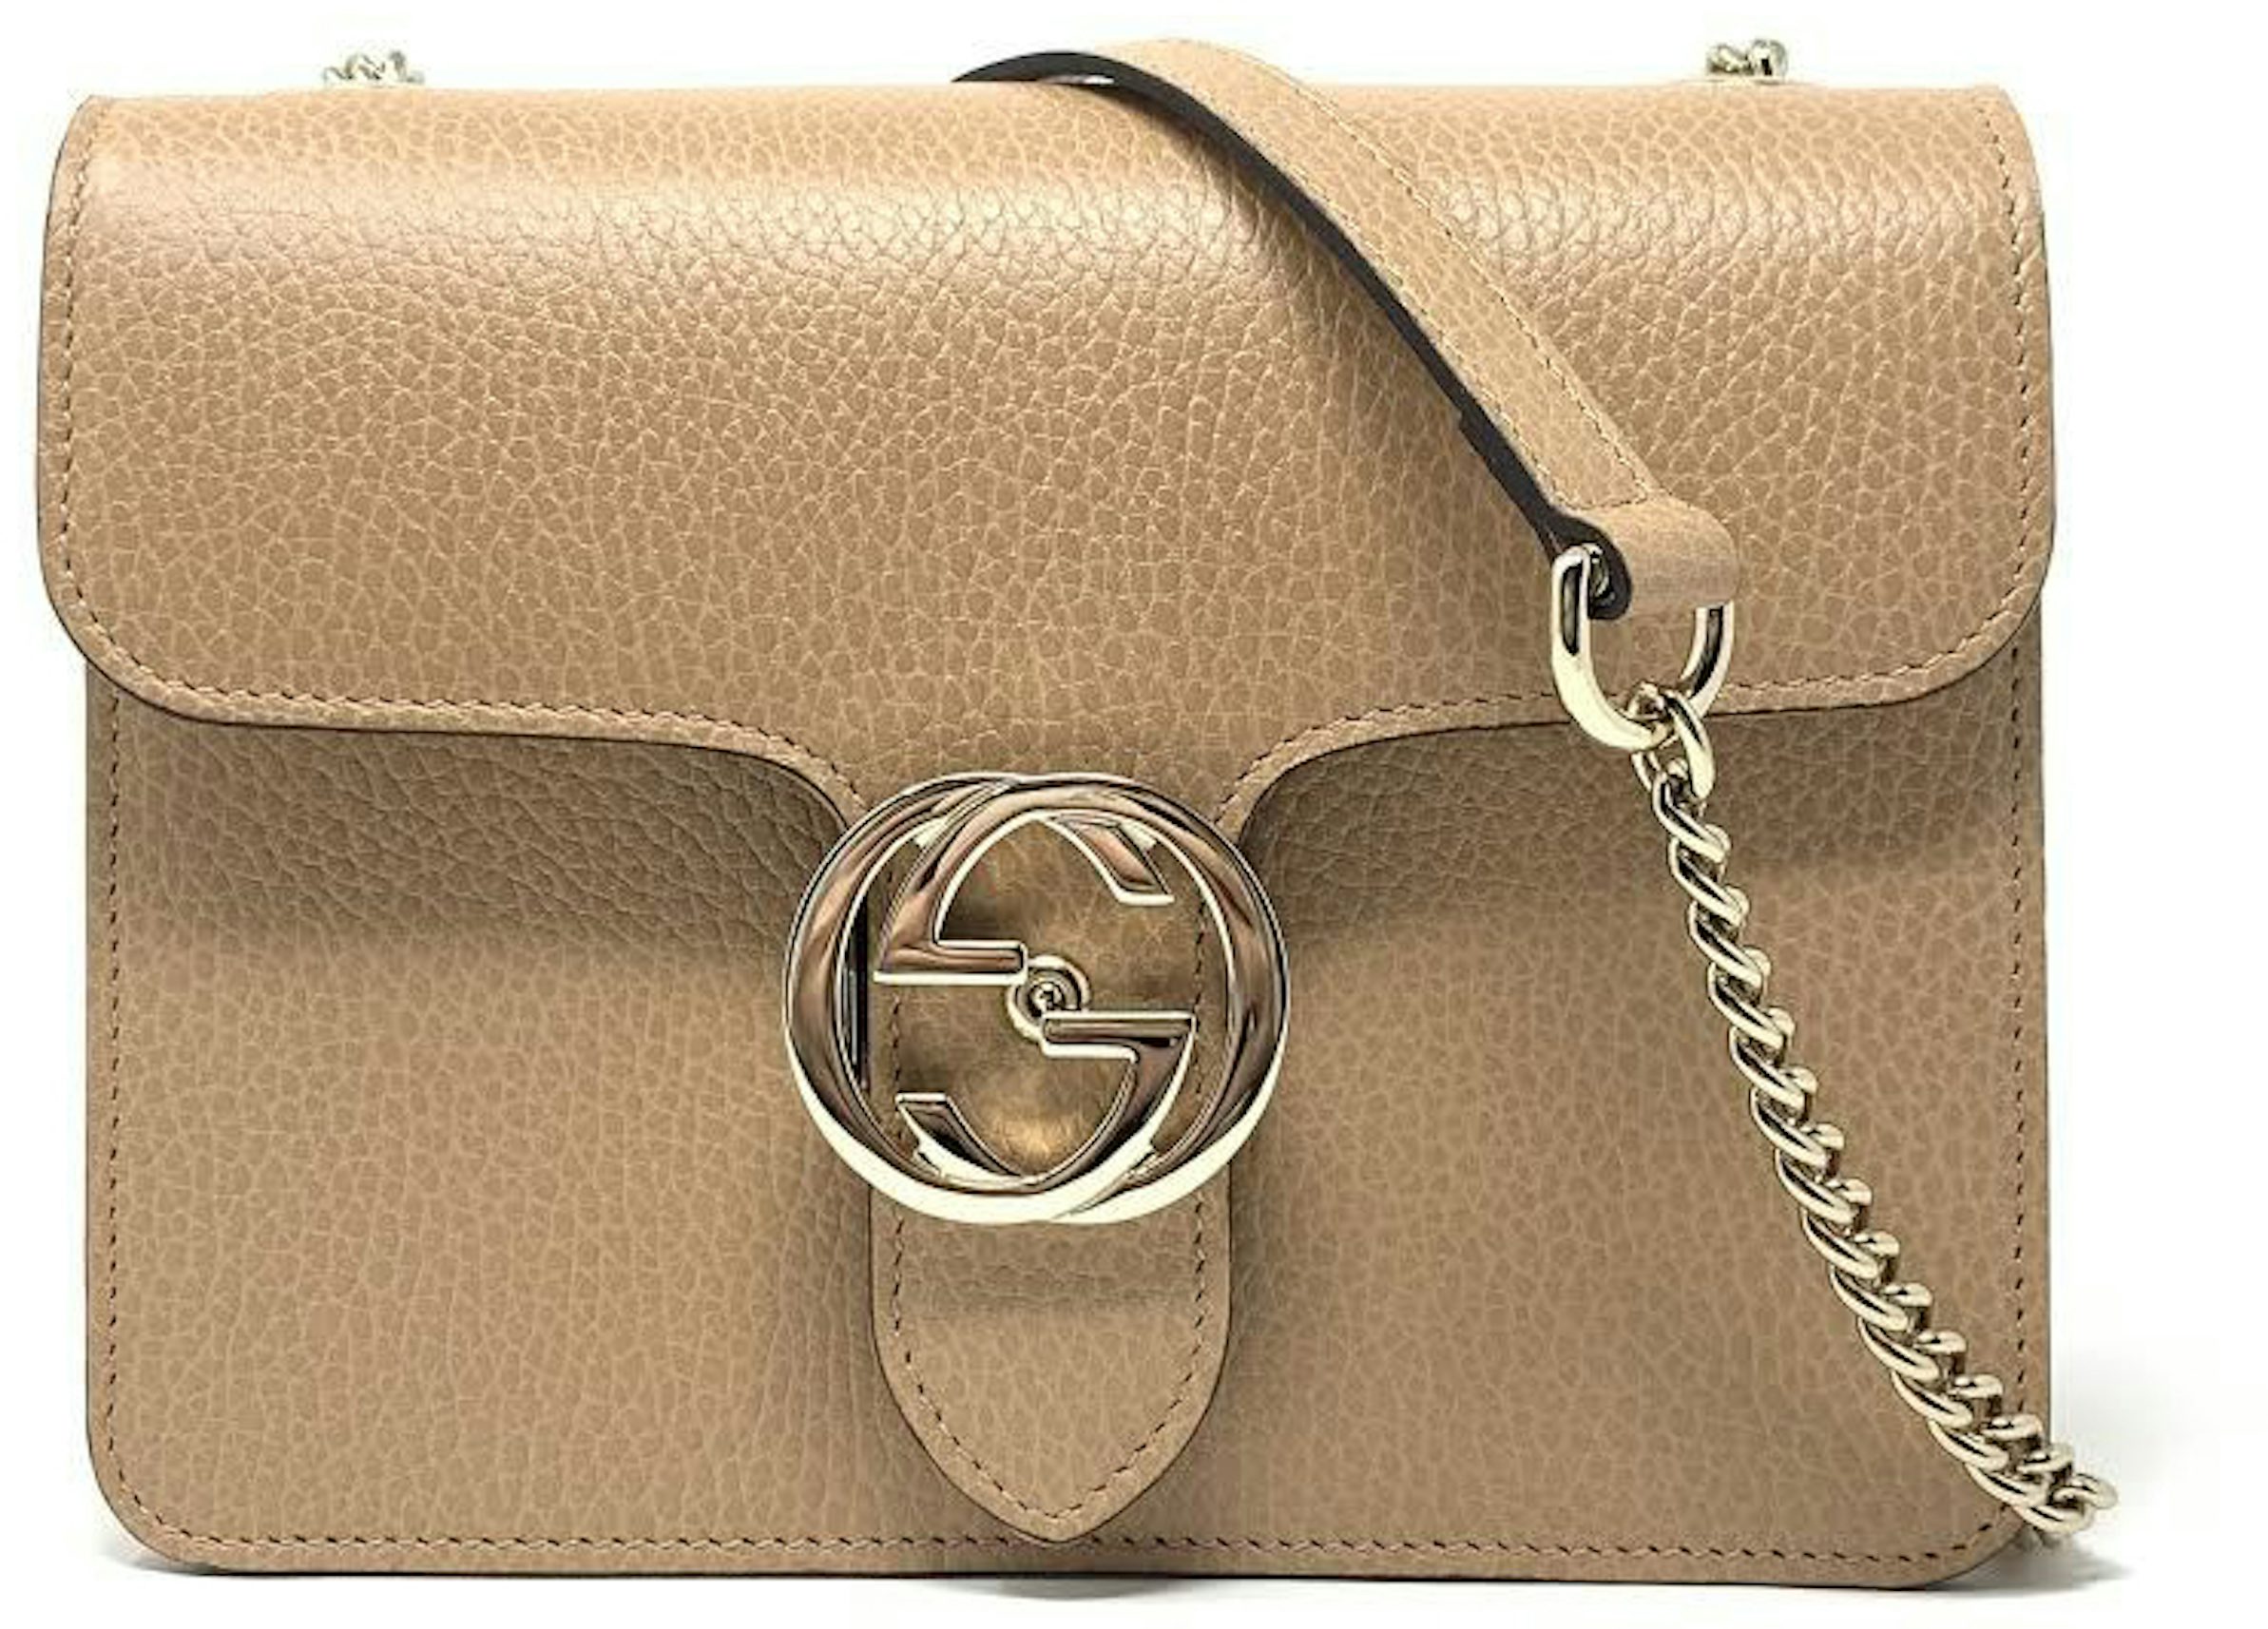 Gucci Interlocking GG GM bag in beige leather - DOWNTOWN UPTOWN Genève